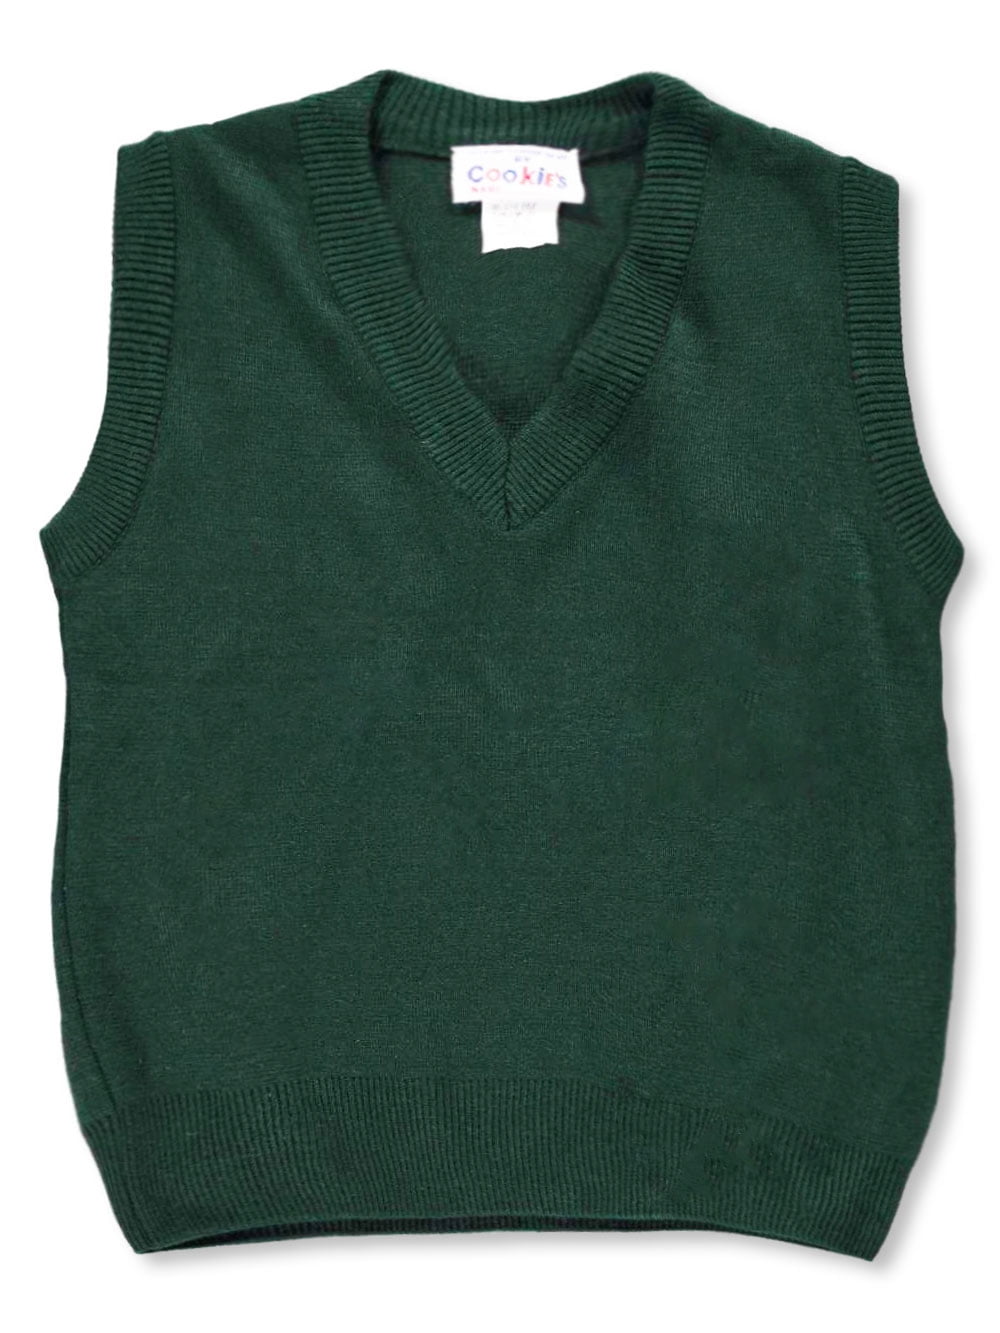 Green Cookies Big Boys V-Neck Sweater Vest 8 